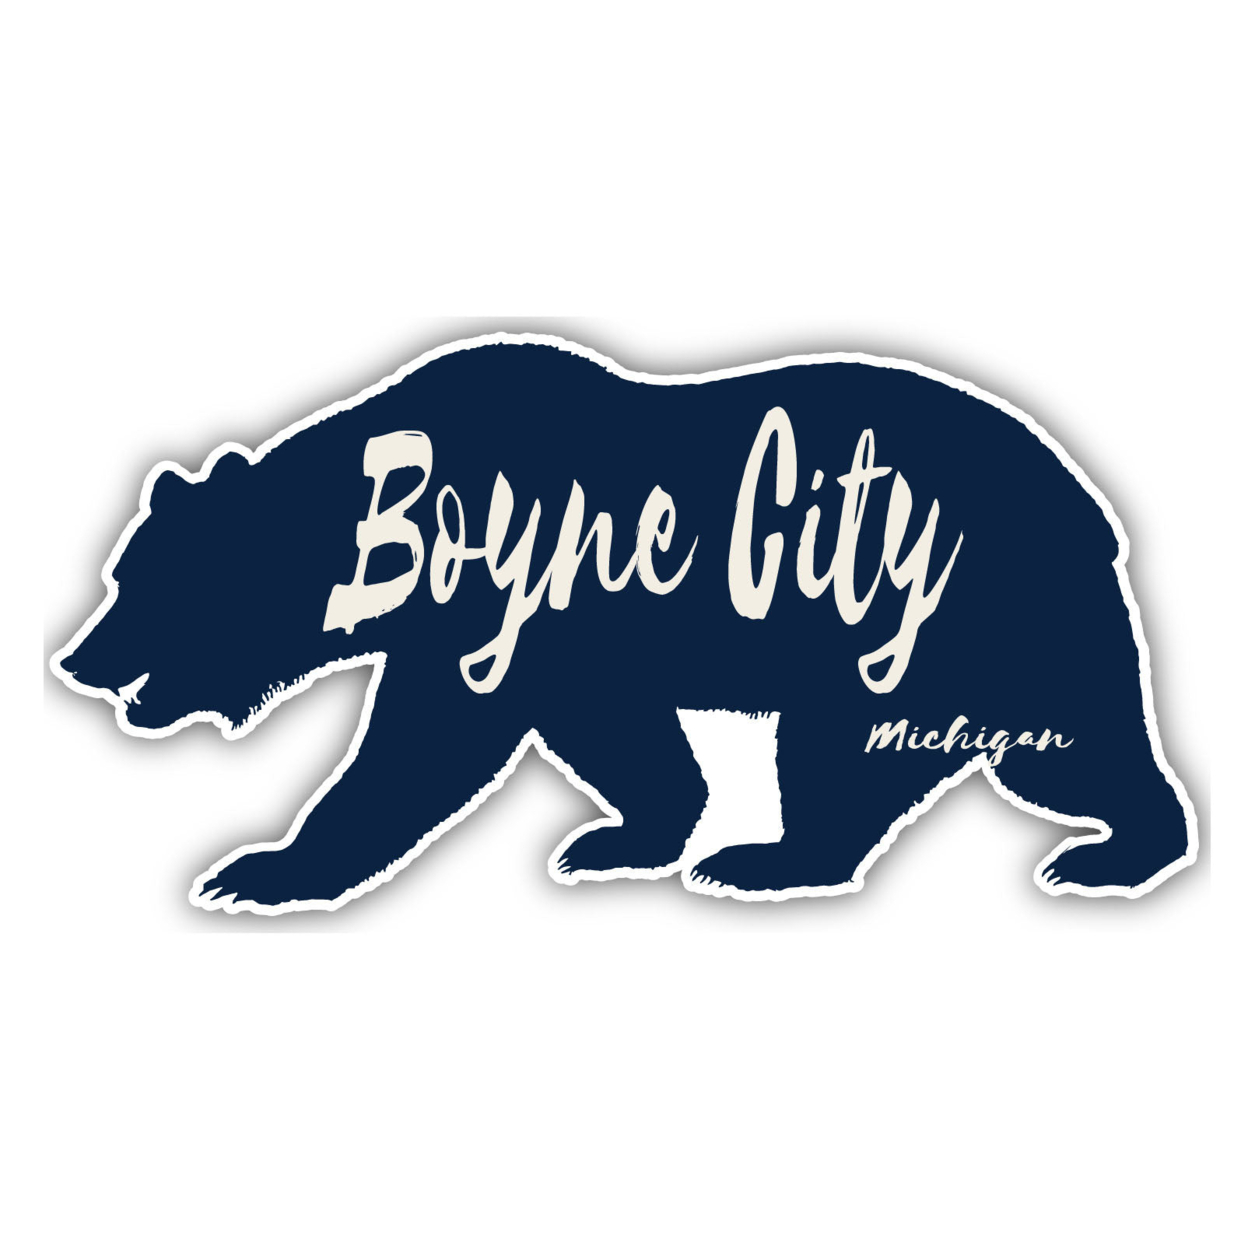 Boyne City Michigan Souvenir Decorative Stickers (Choose Theme And Size) - 4-Pack, 10-Inch, Bear